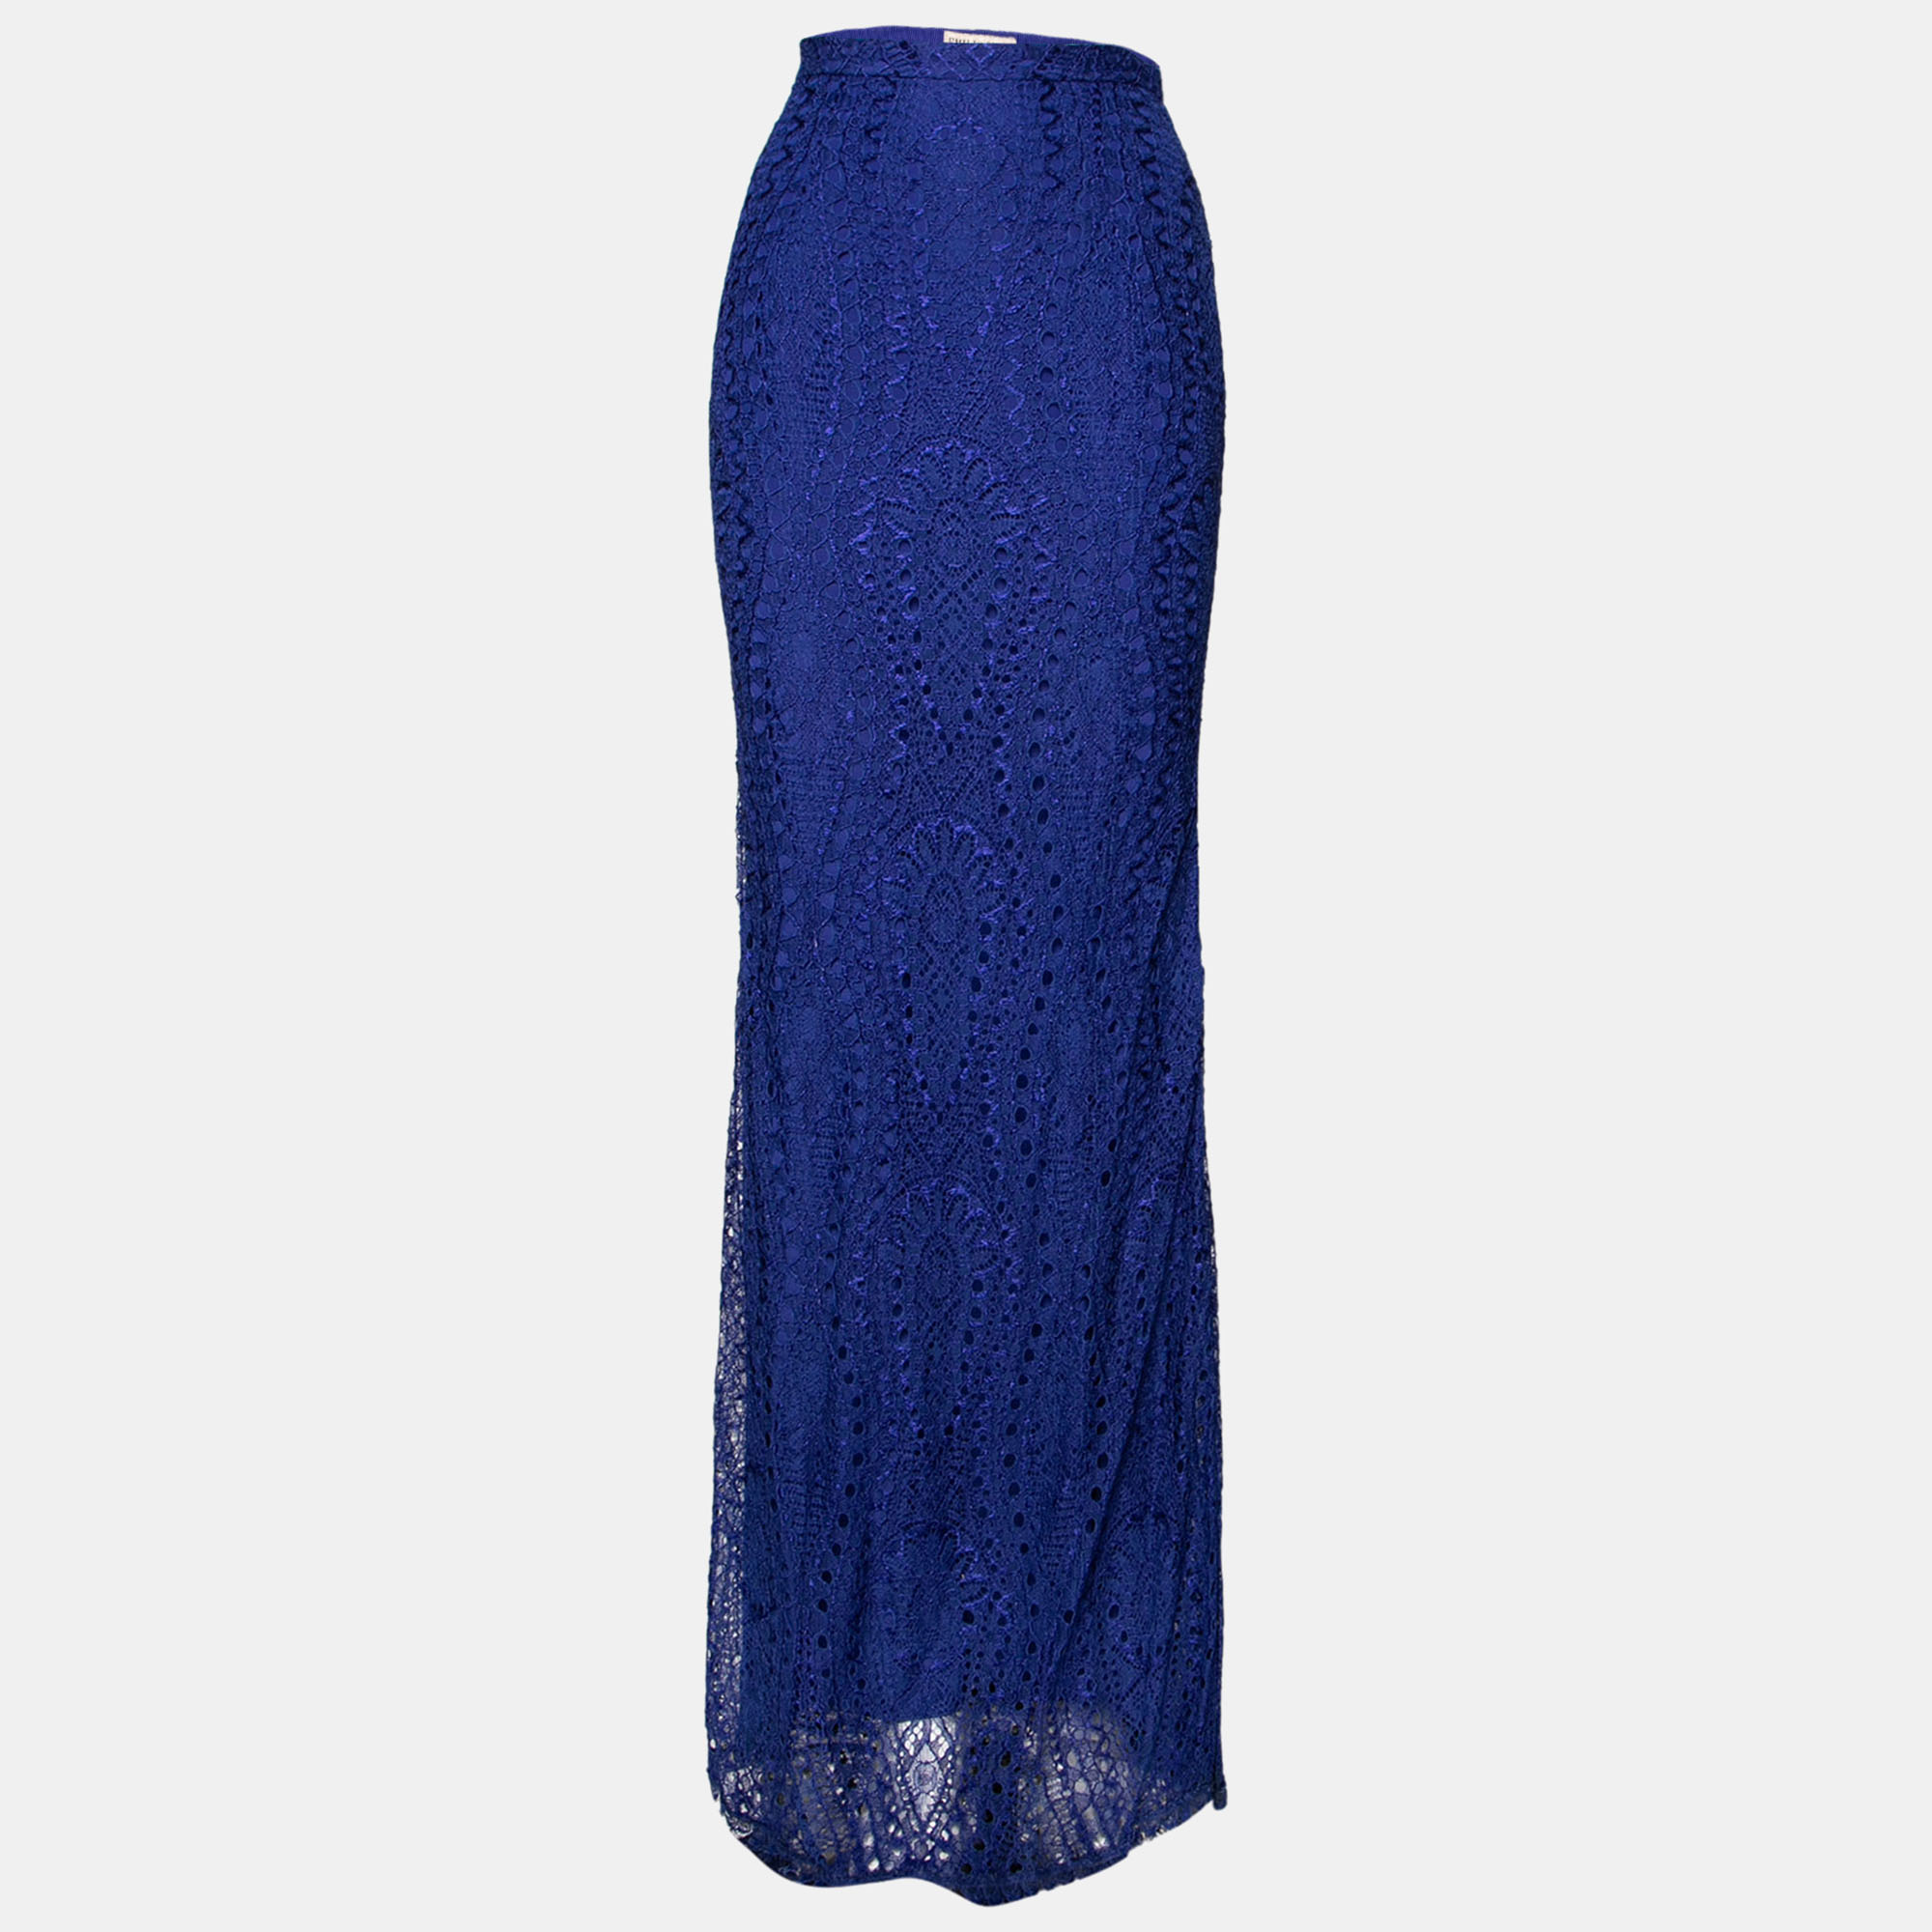 Emilio pucci blue lace maxi skirt s